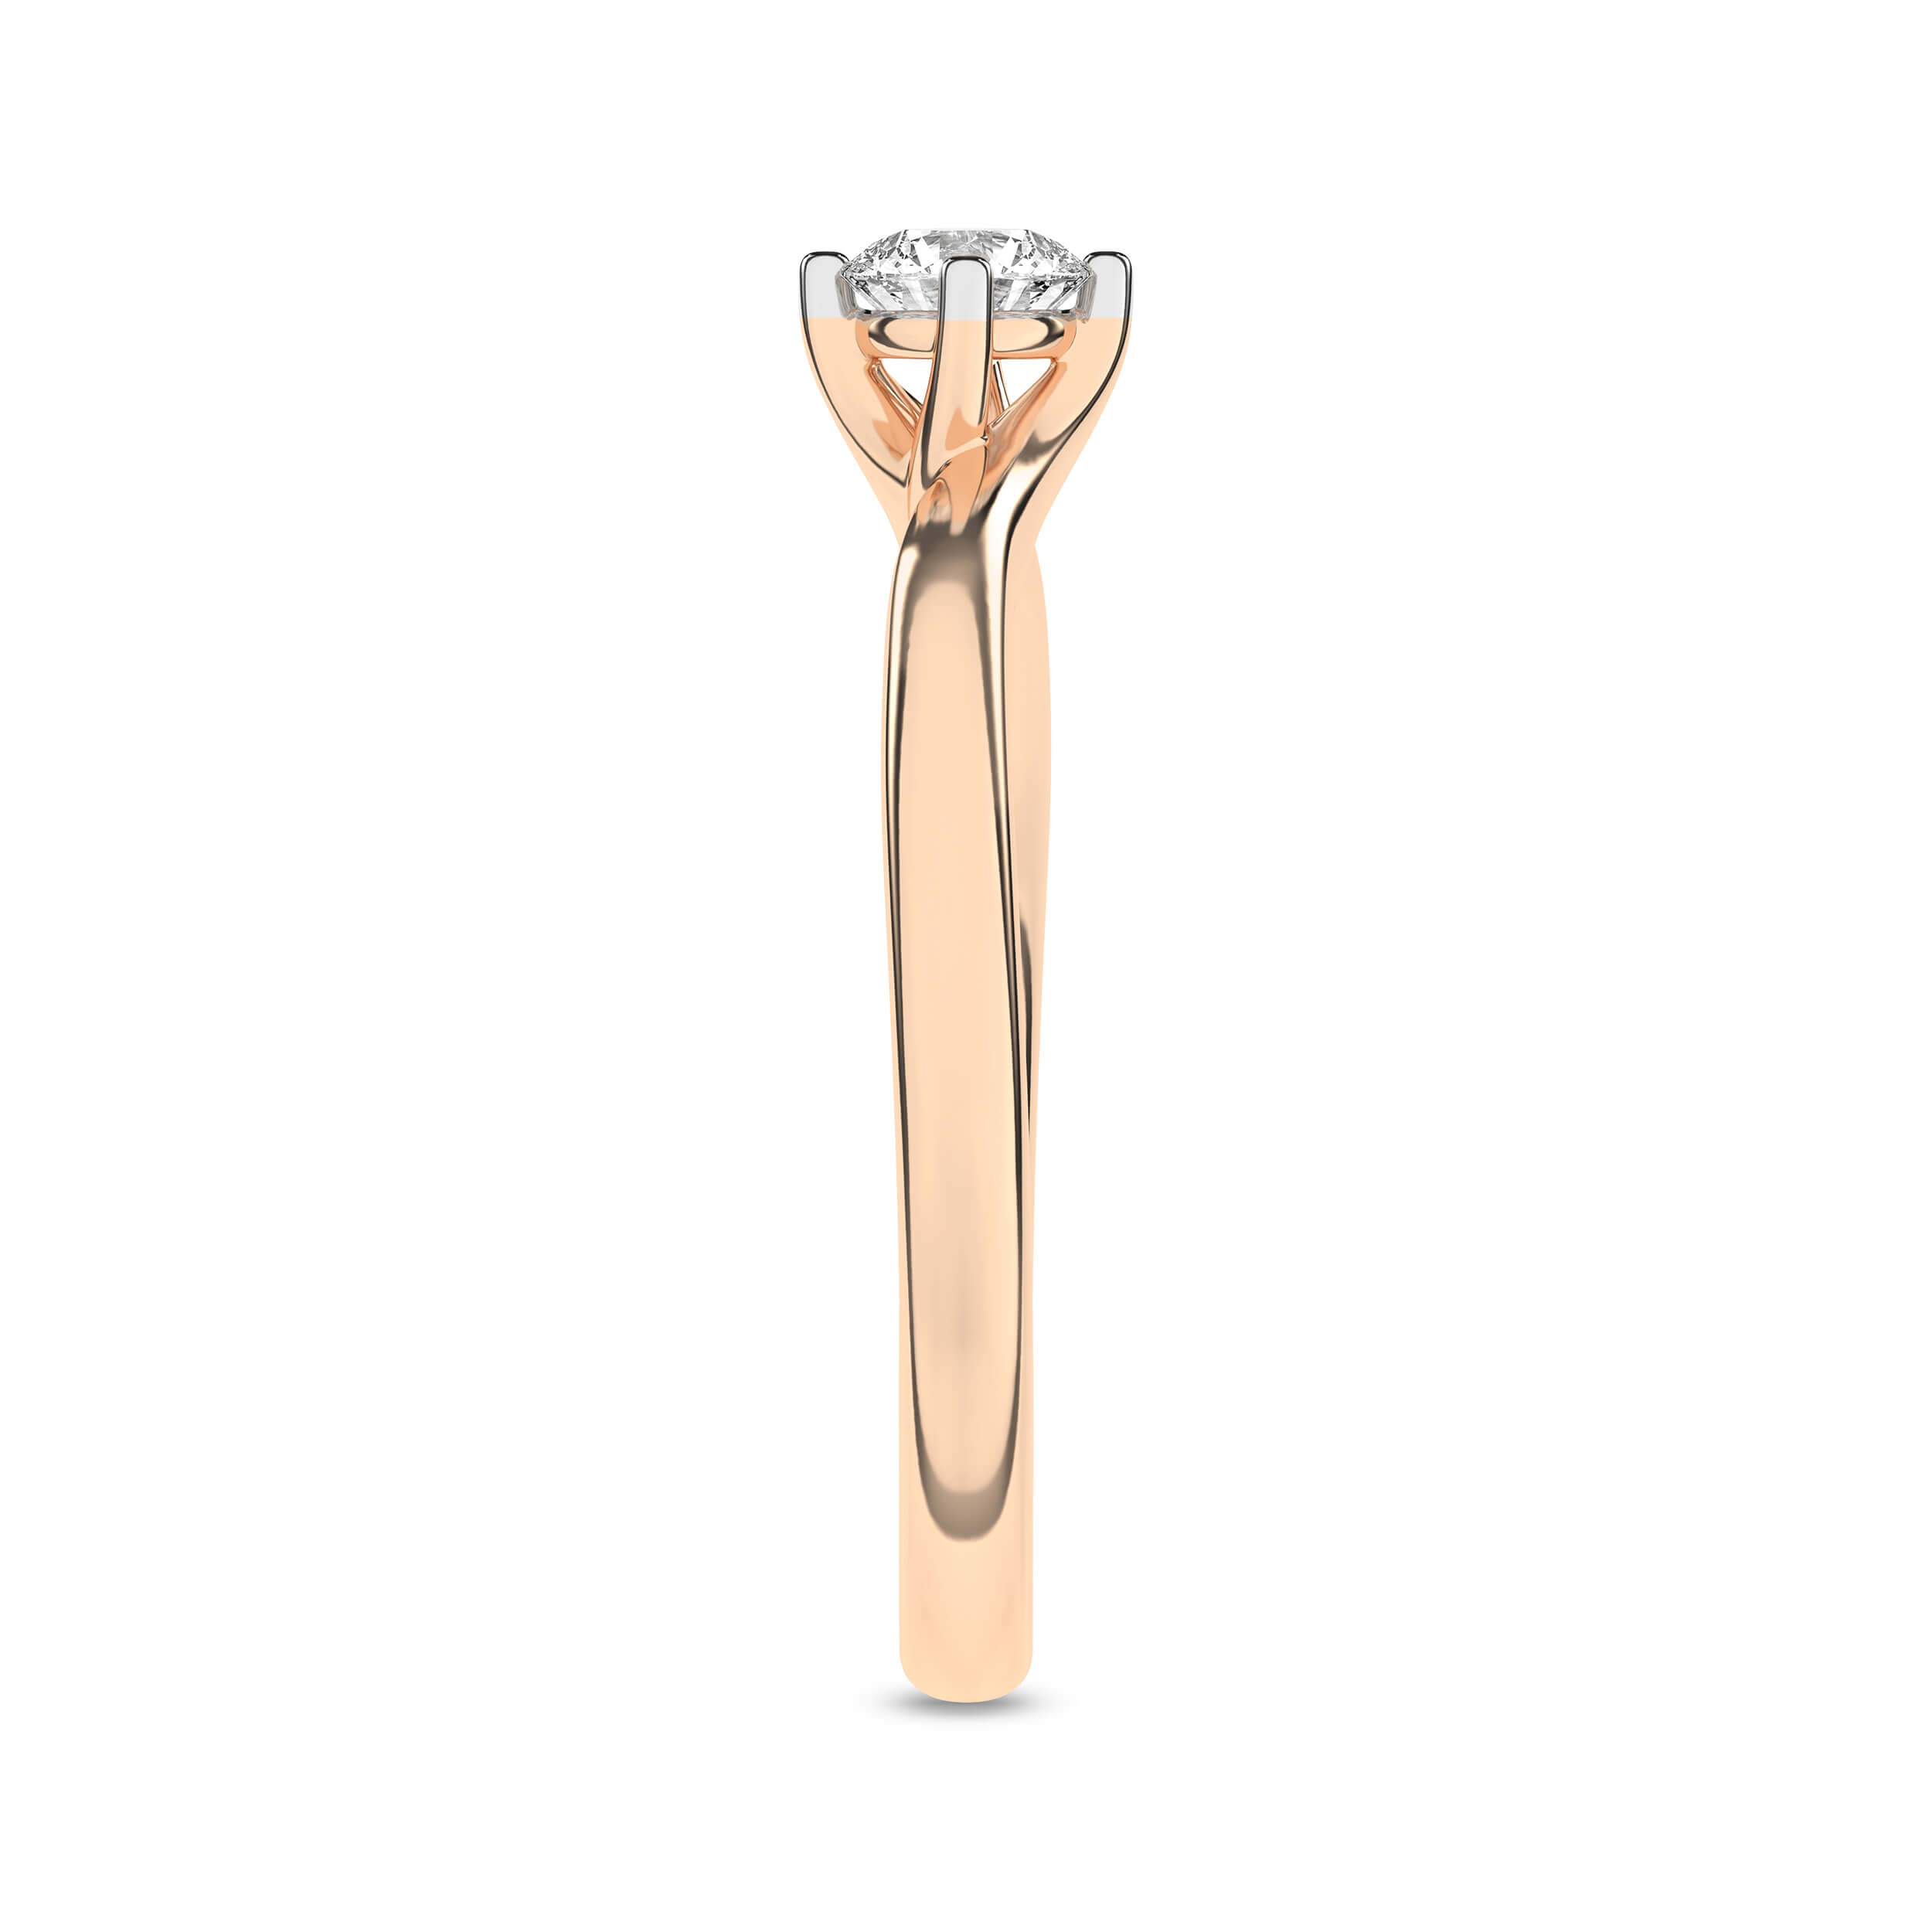 Inel de logodna din Aur Roz 14K cu Diamant 0.25Ct, articol RS0608, previzualizare foto 3